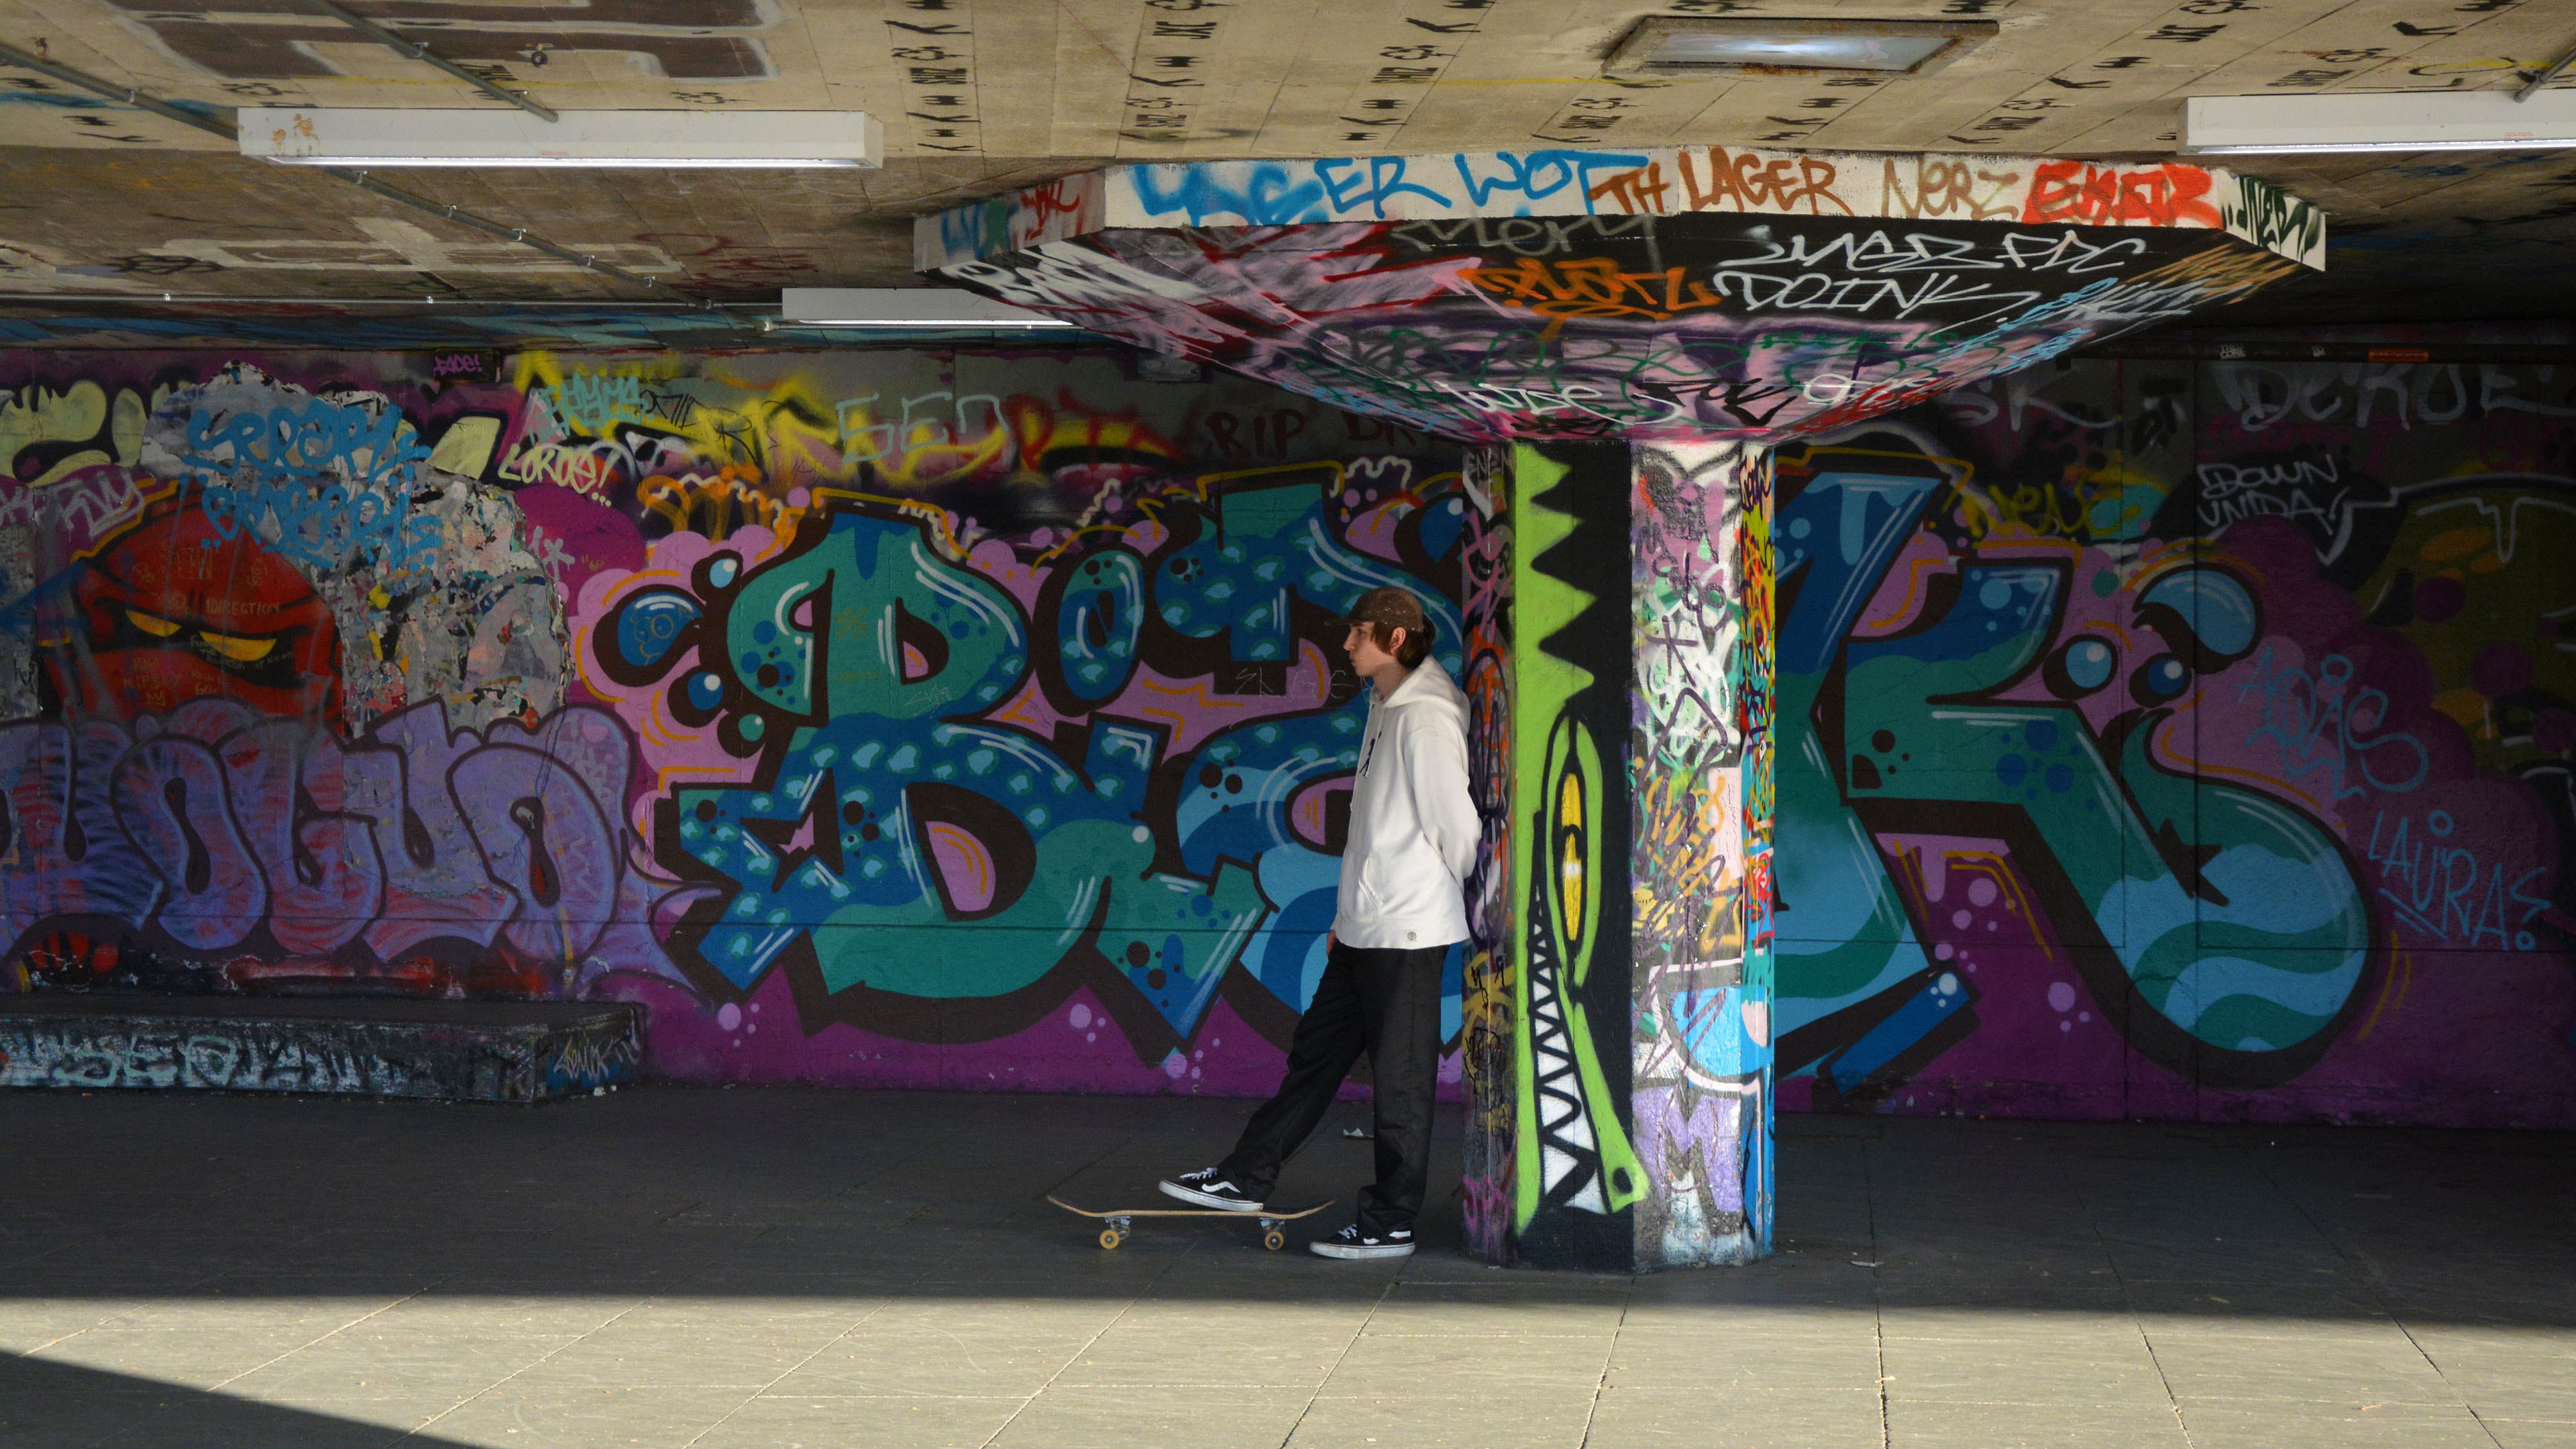 Skateboard park and graffiti